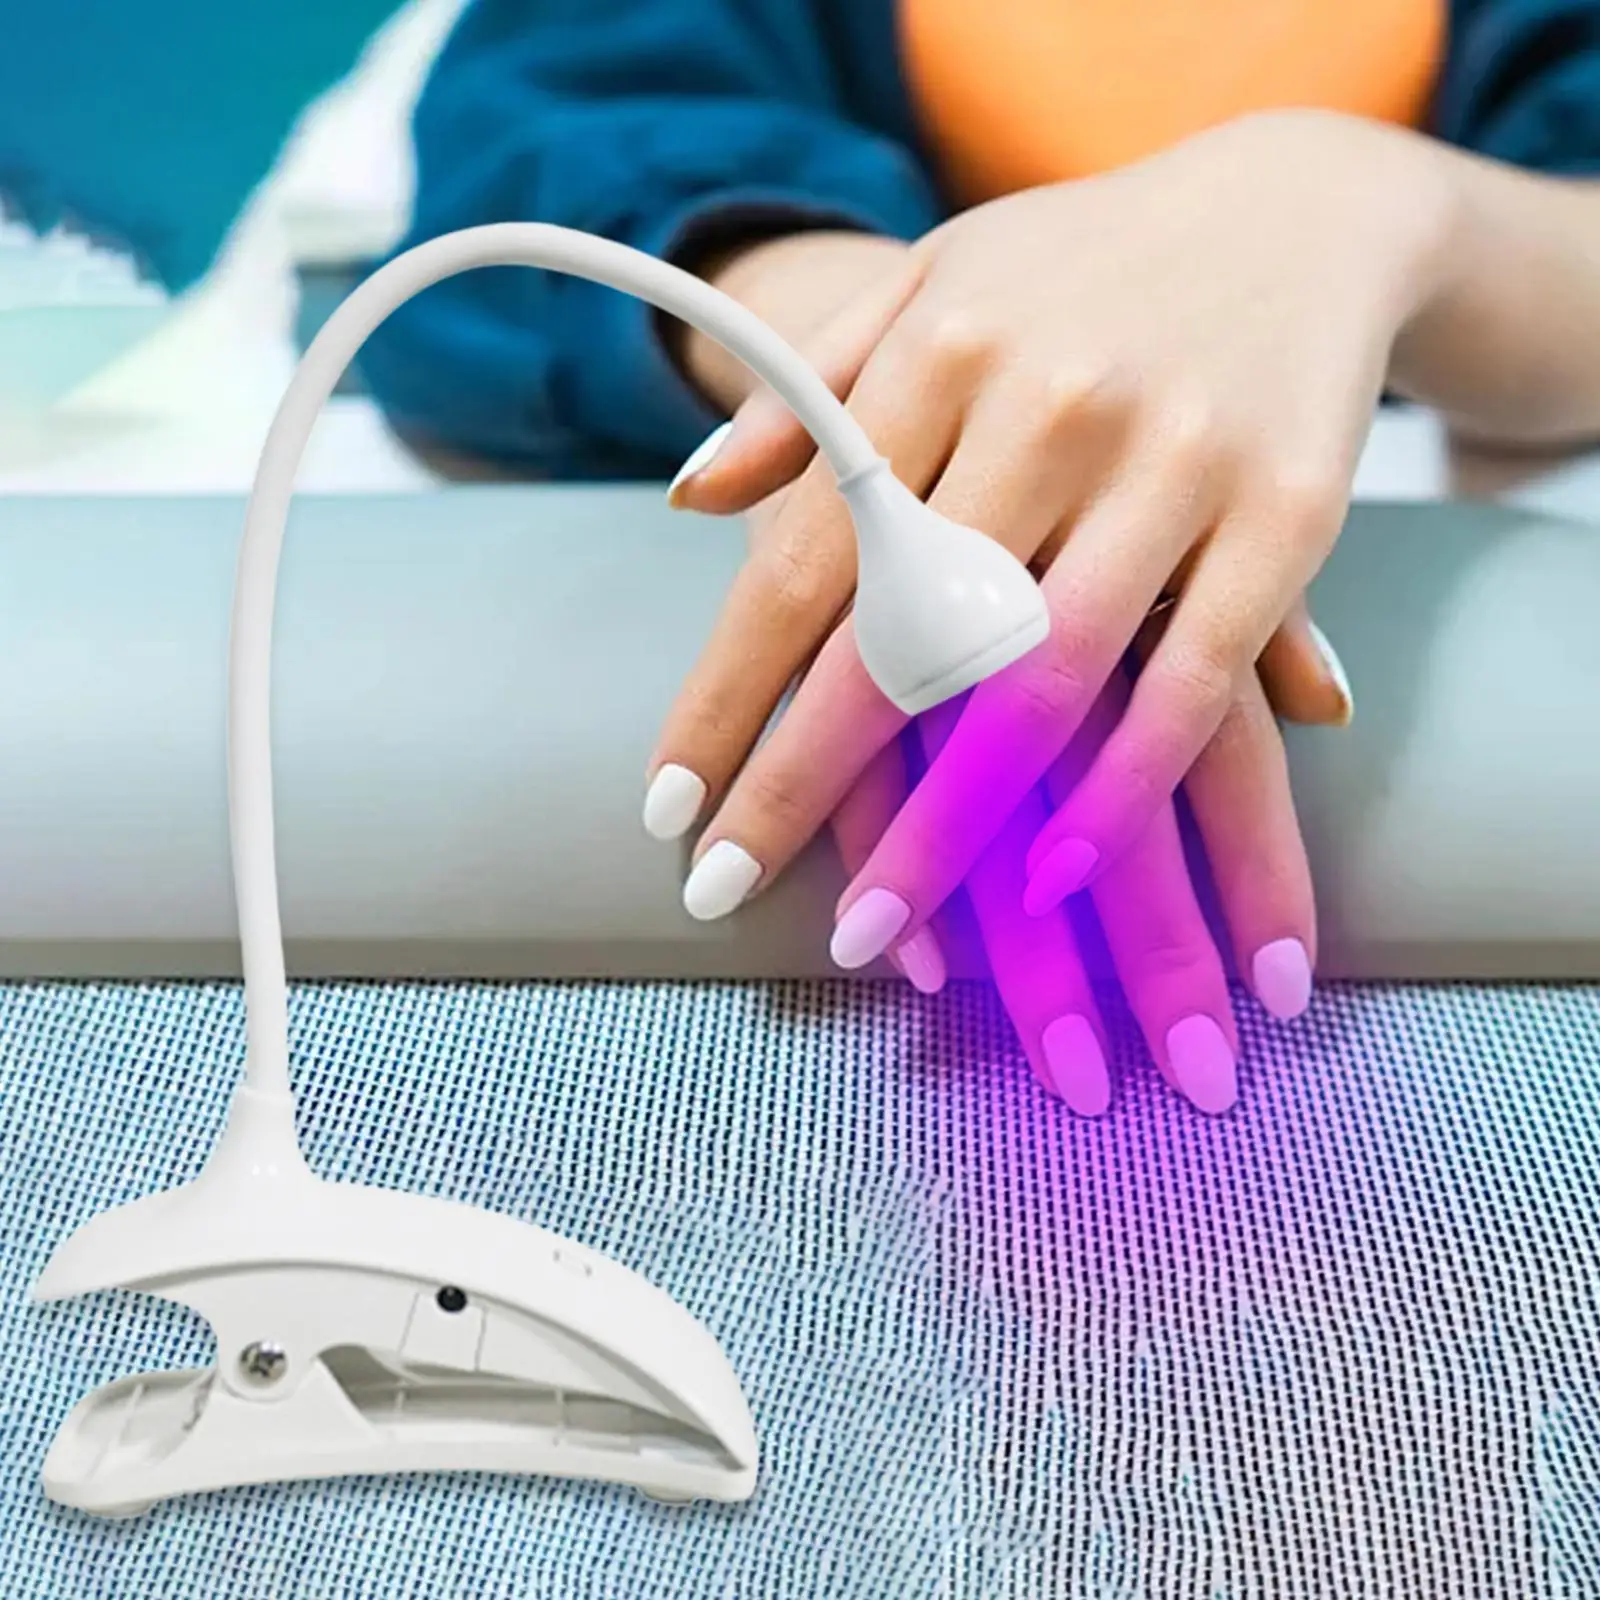 Nail Dryer Lamp Flexible Compact 360 Degree Adjustable with Clamp Nail Art Tool USB Charging Nail Lamp for Salon Home DIY